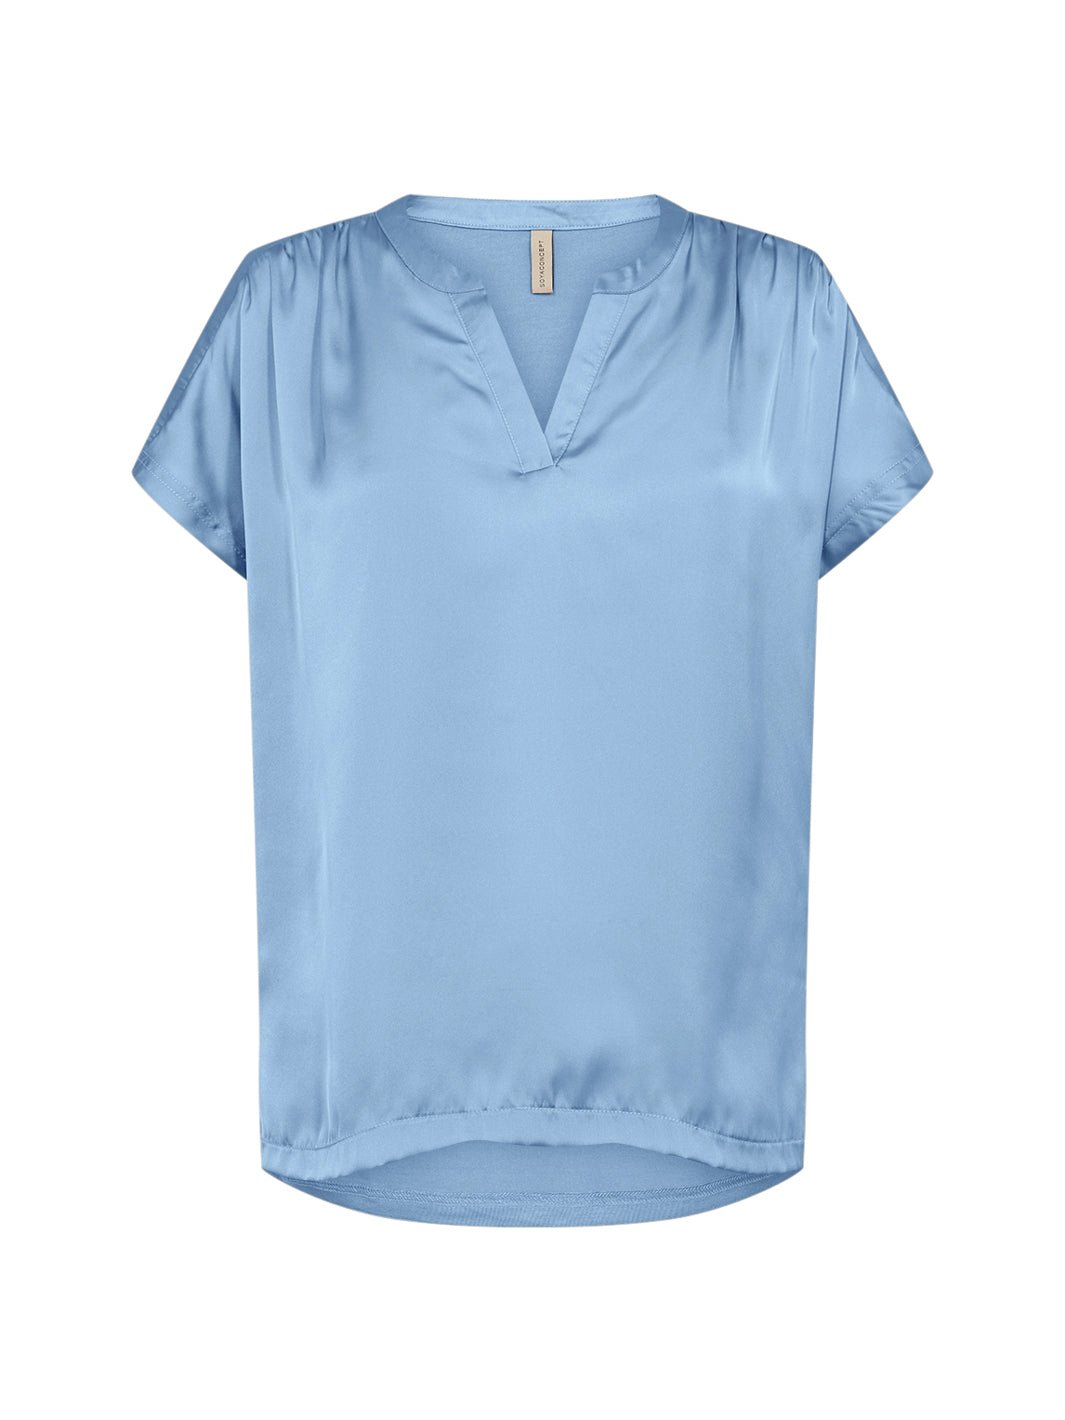 Soya Concept Thilde 49 t-shirt light blue - Online-Mode